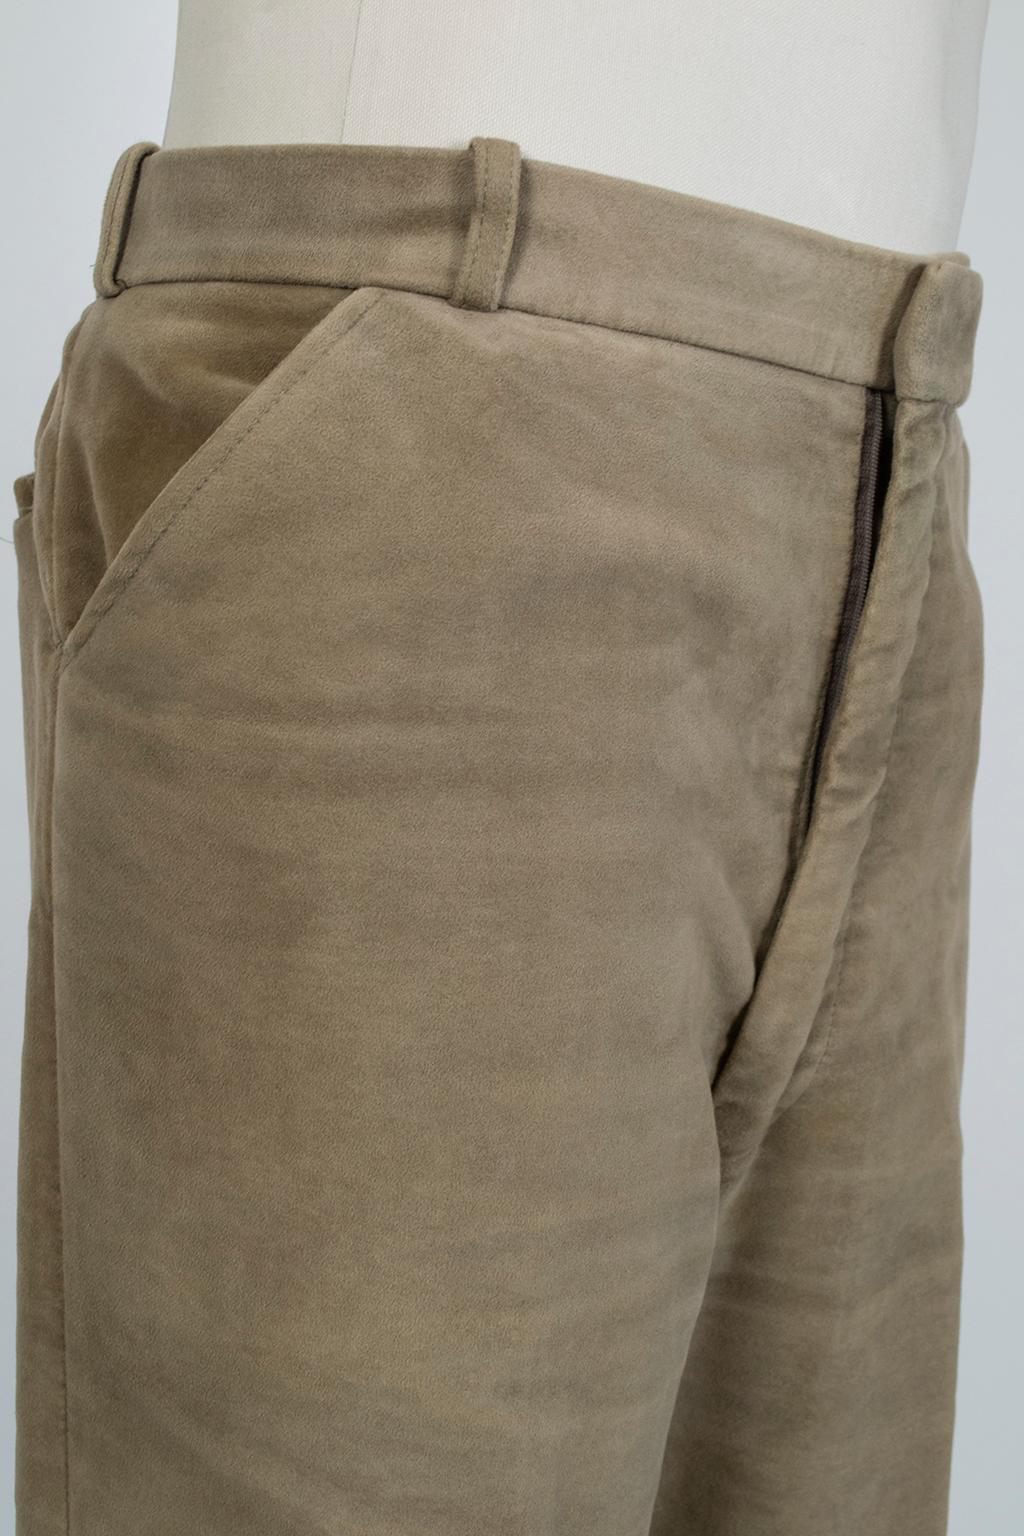 Men’s British Khaki Moleskin Norfolk Hunting Jacket and Trouser Set - XL, 1960s For Sale 3